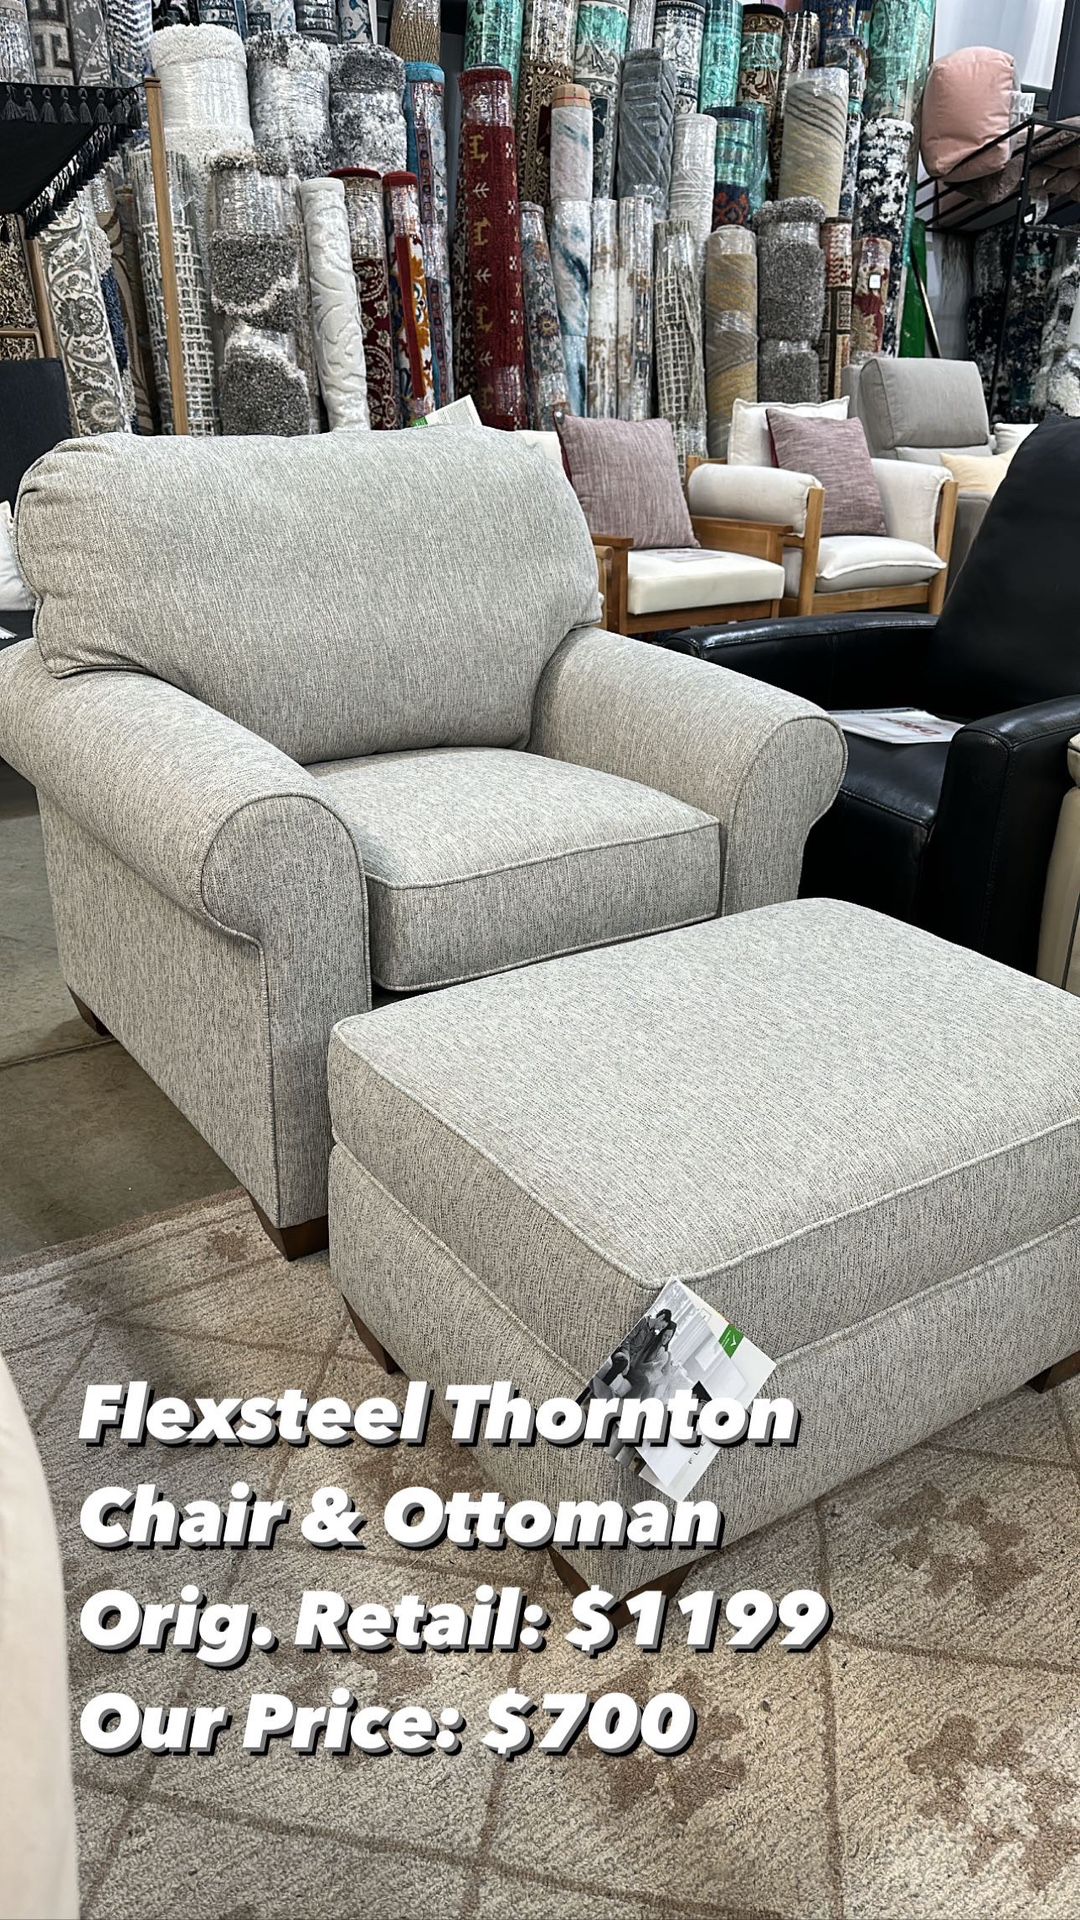 Flexsteel Thornton Accent Chair & Ottoman